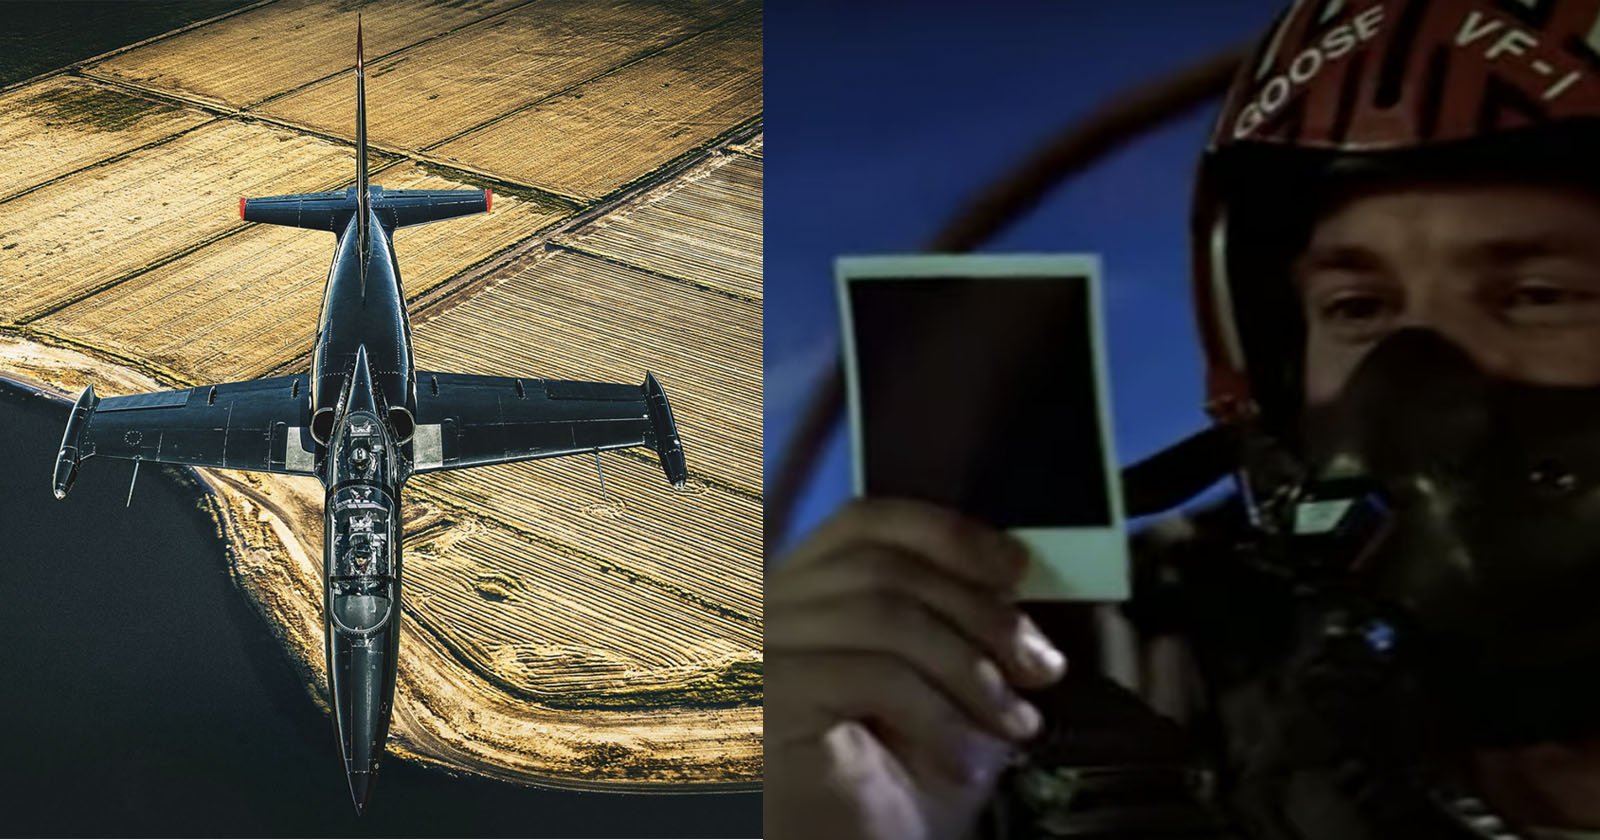 Photographer Recreated The Iconic Top Gun Jet-to-Jet Photo Scene